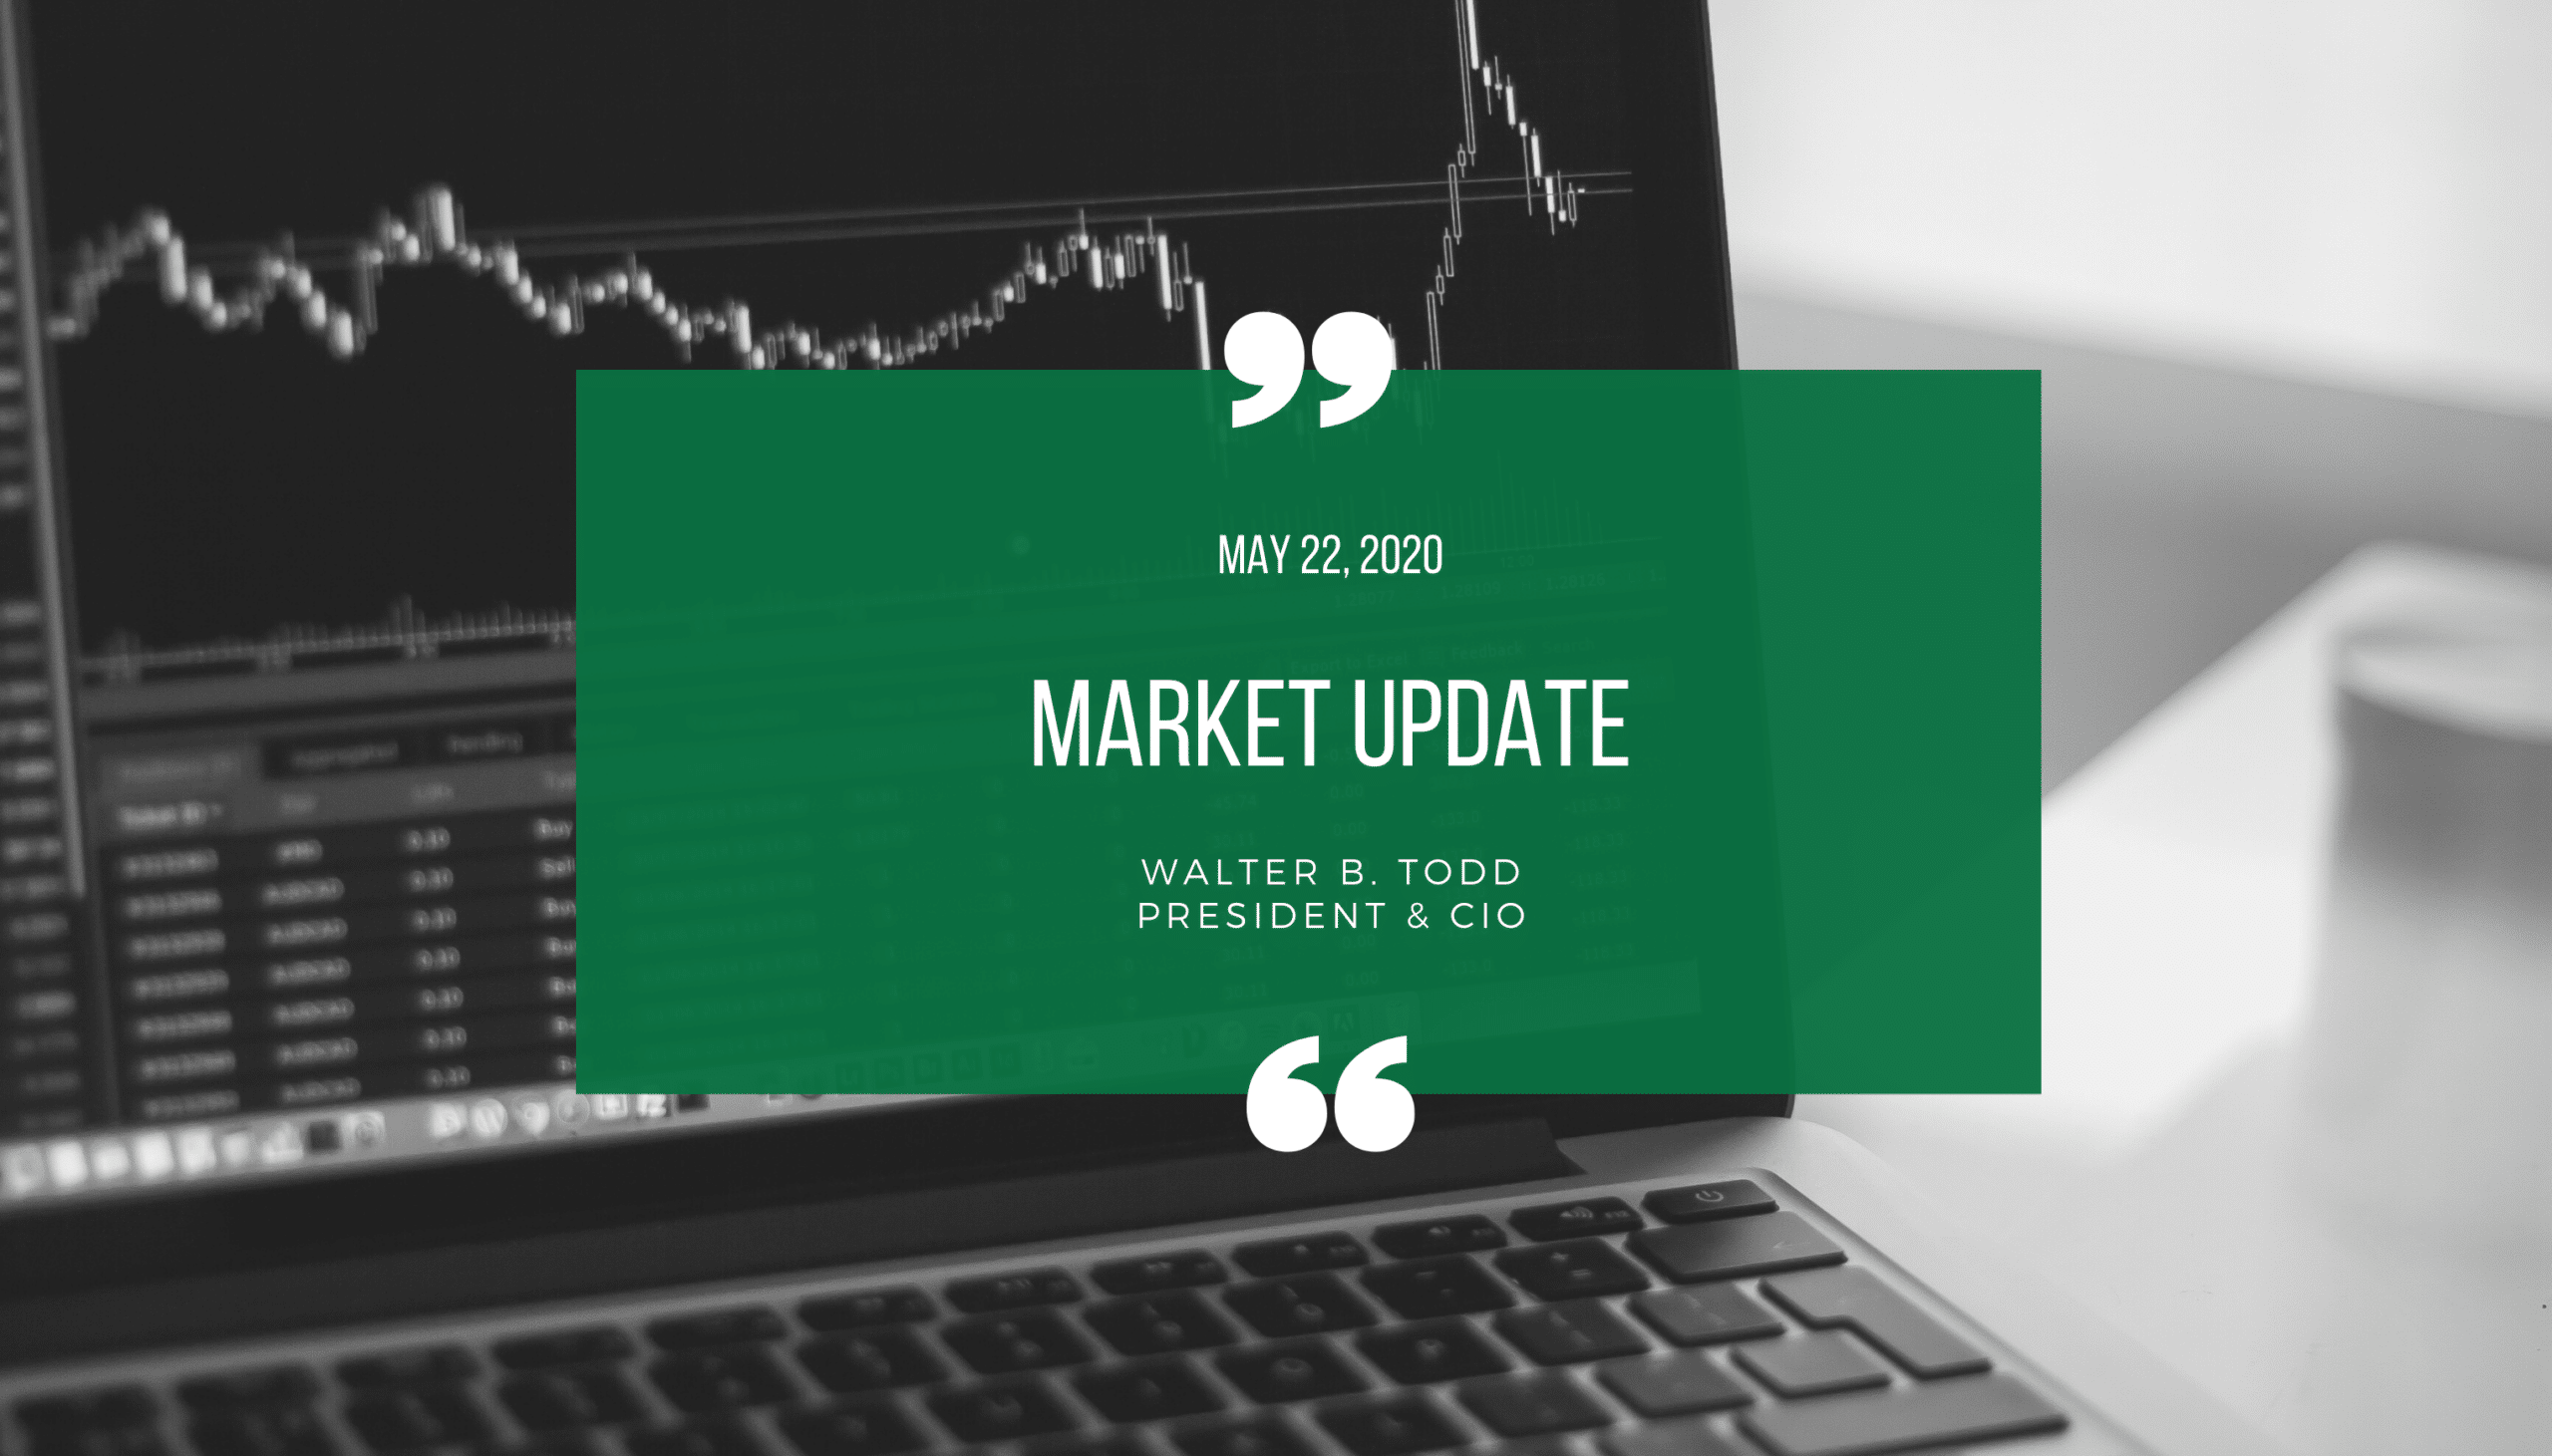 Market Update from Walter Todd